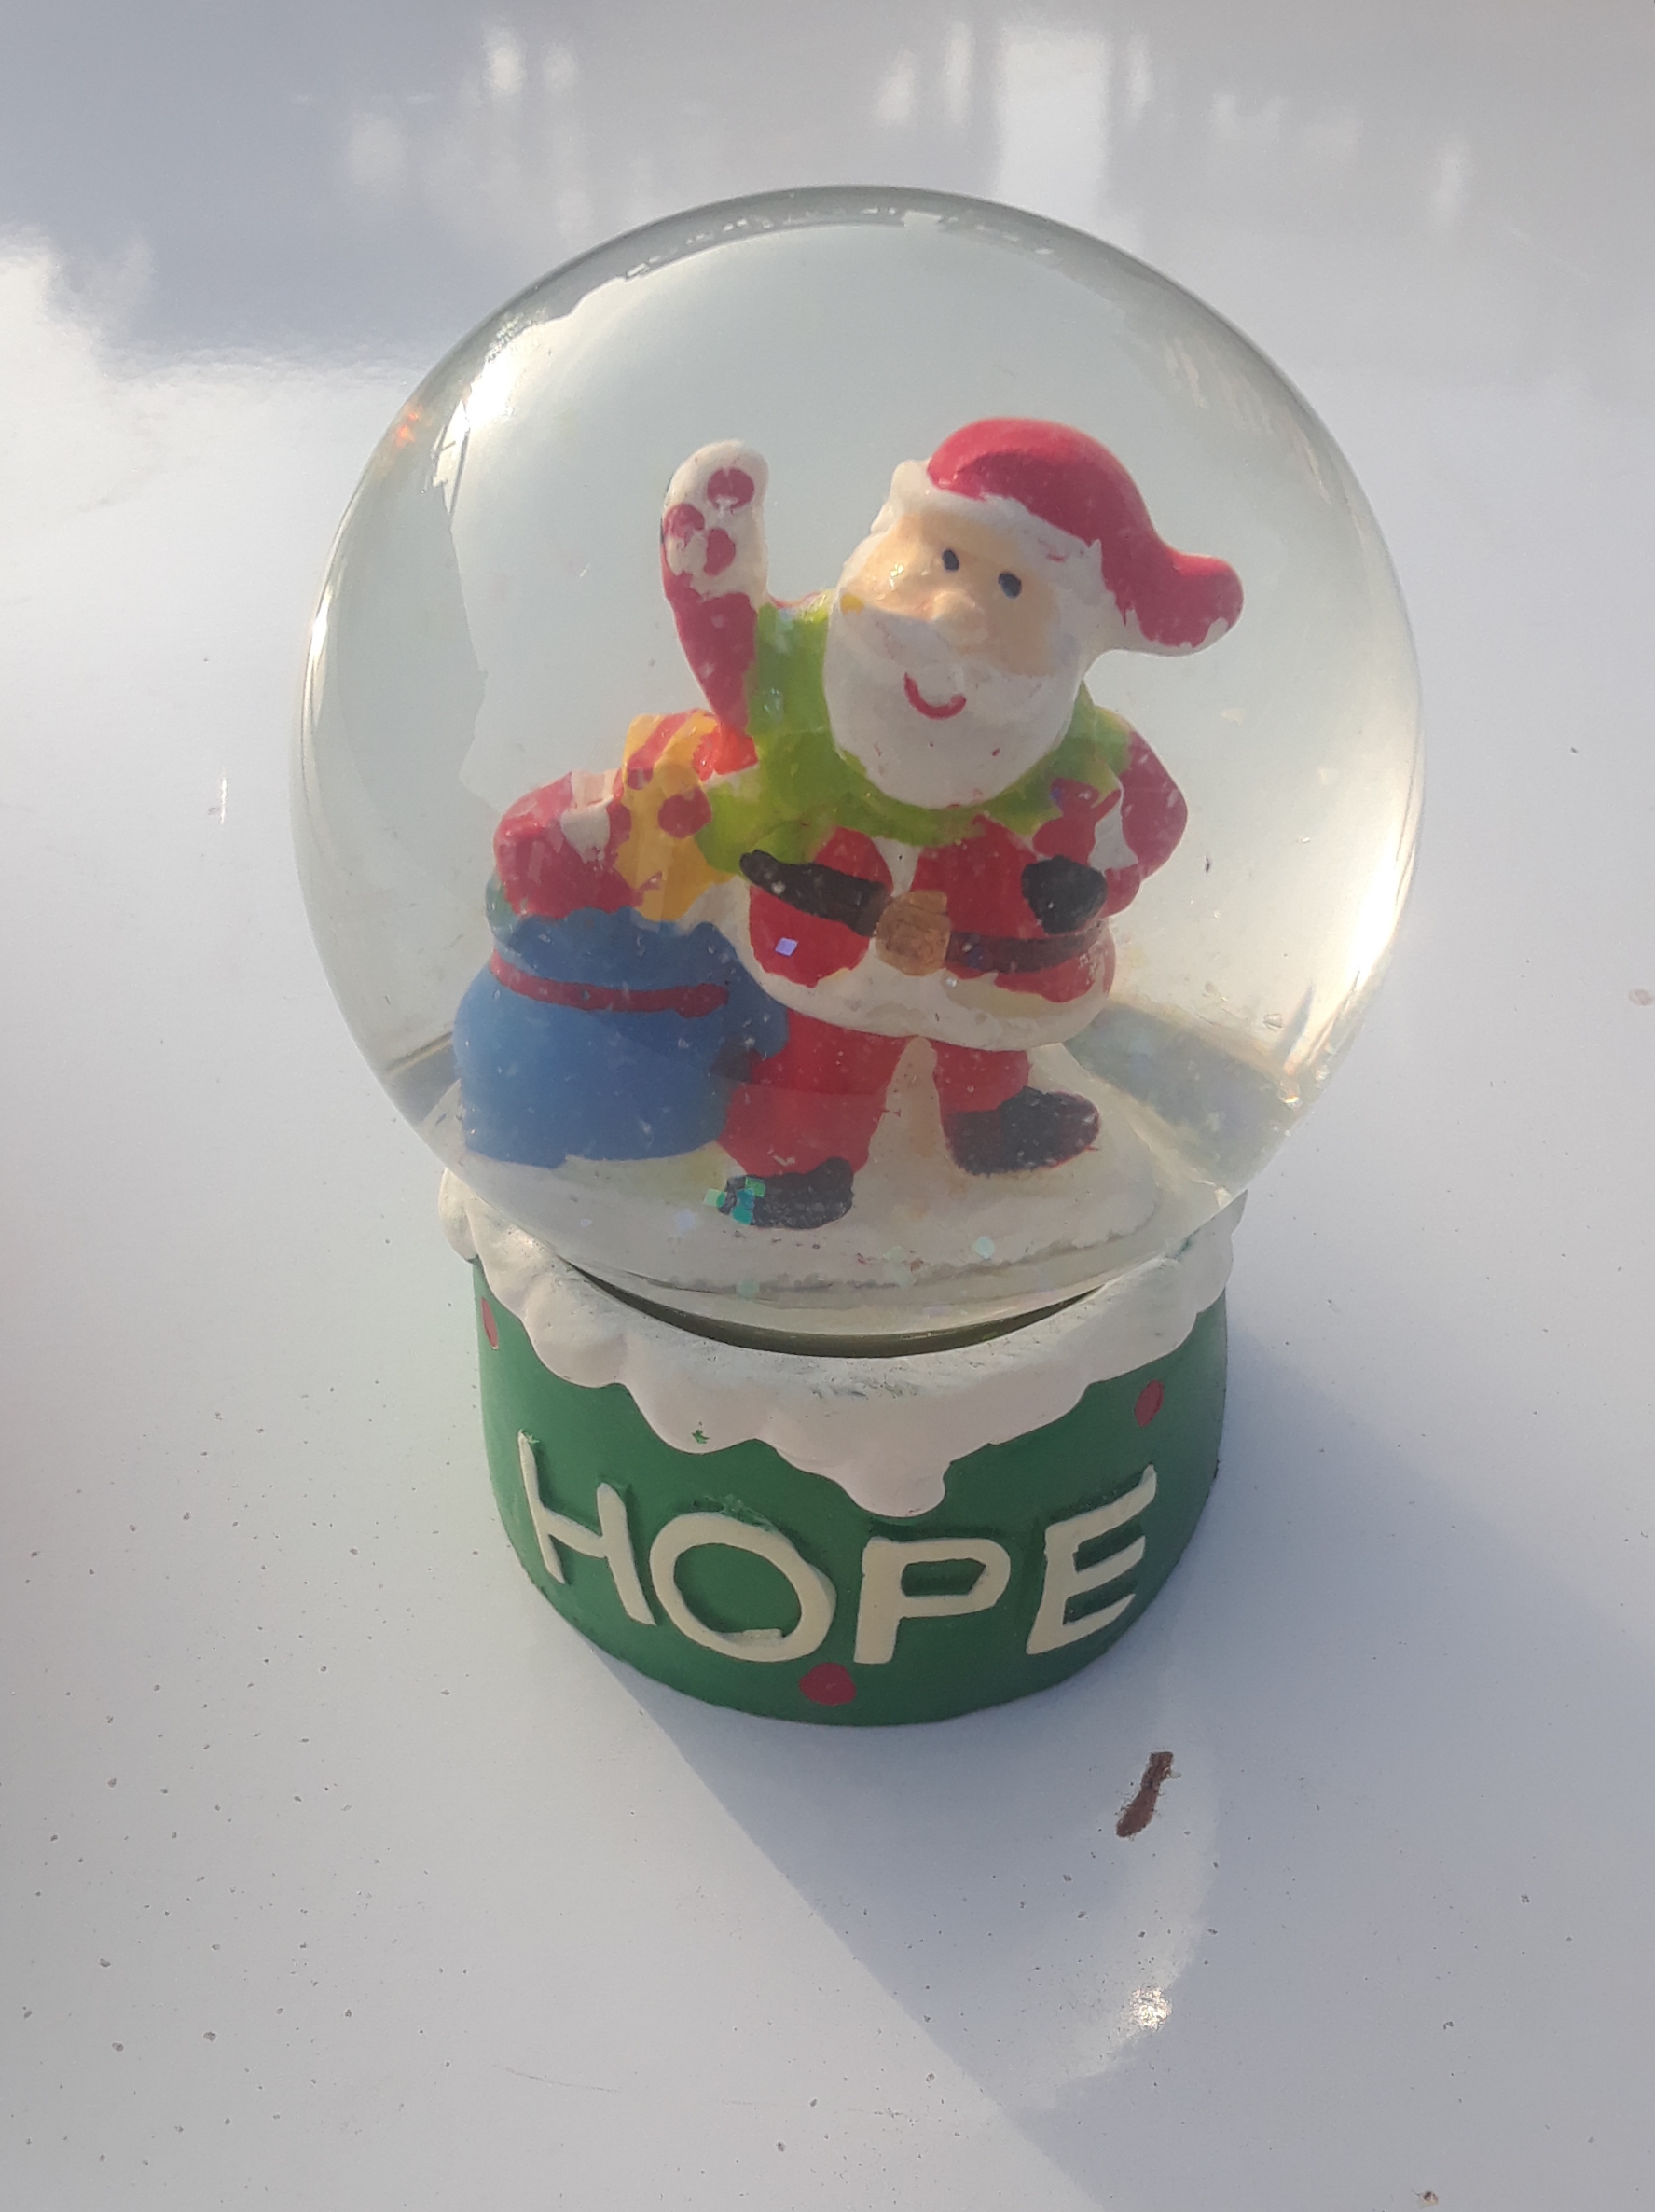 Hope snow globe